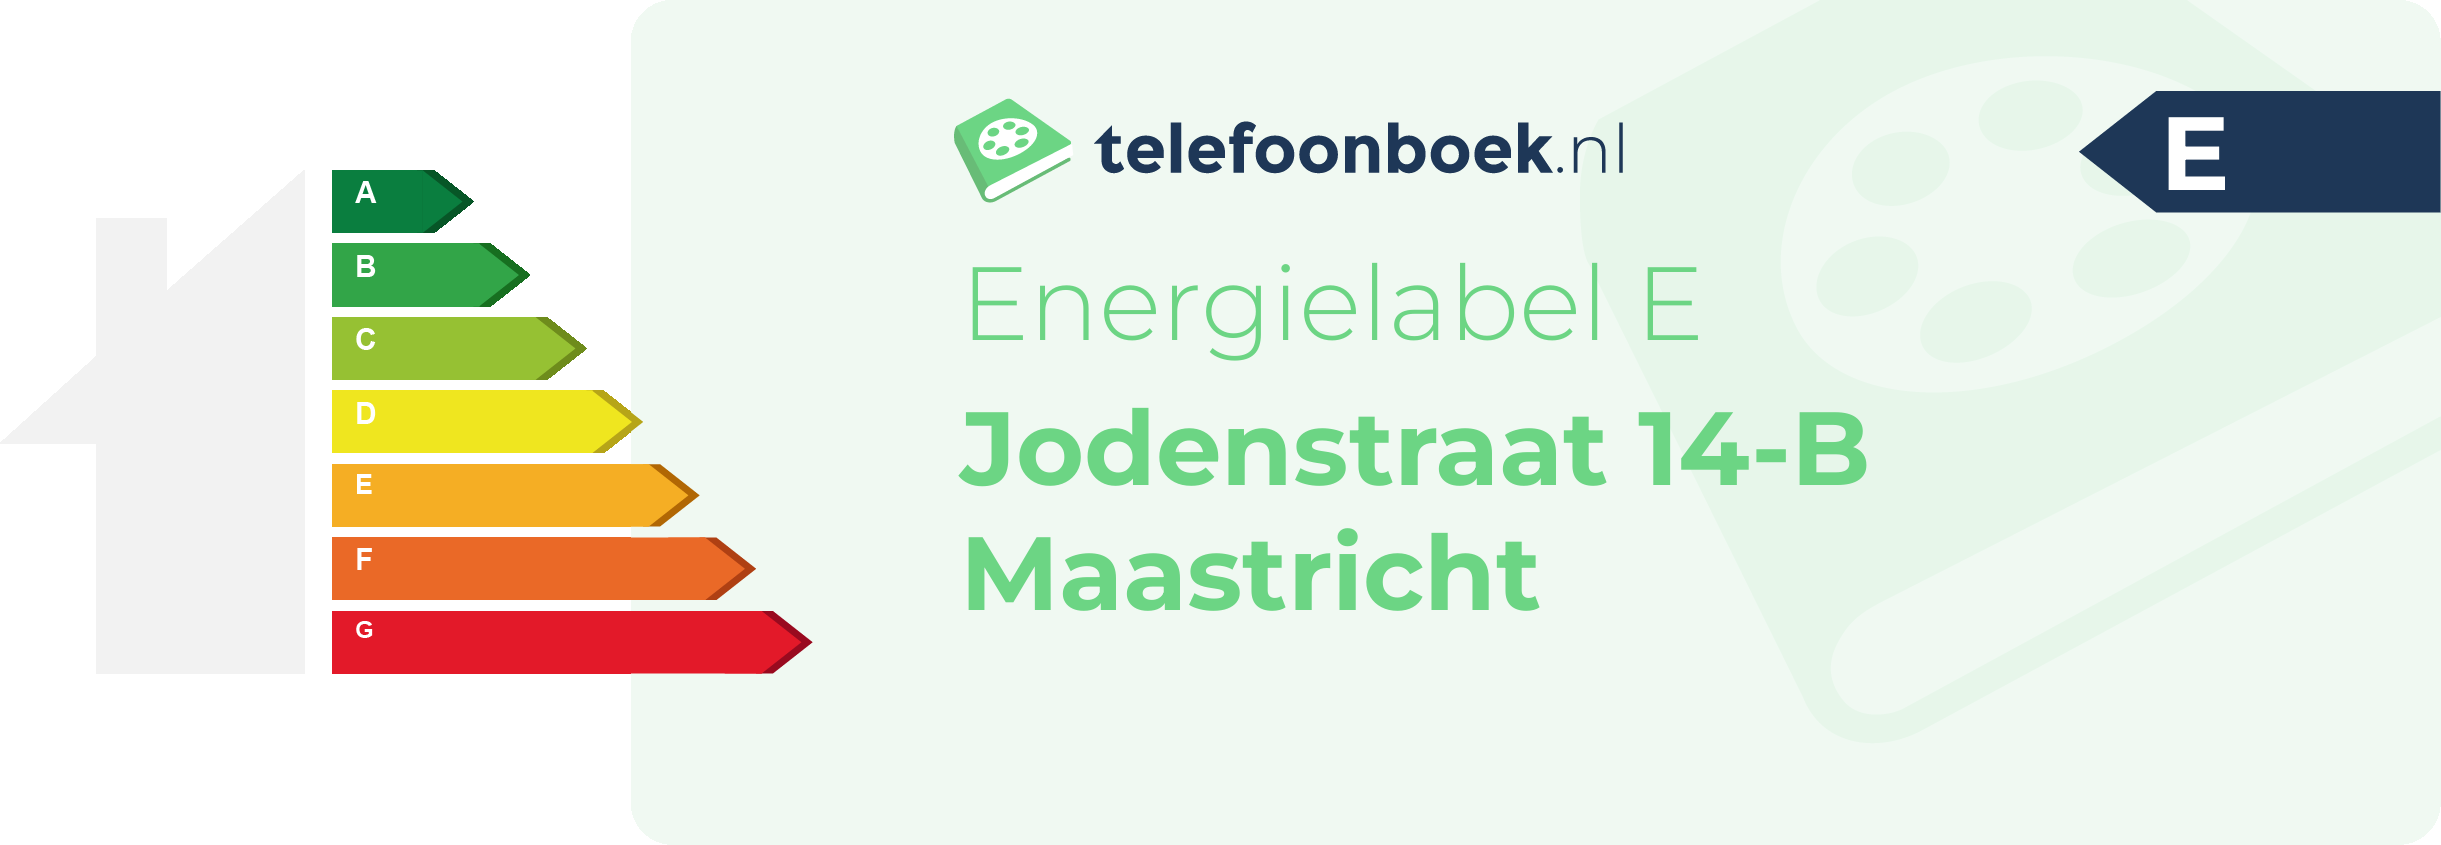 Energielabel Jodenstraat 14-B Maastricht